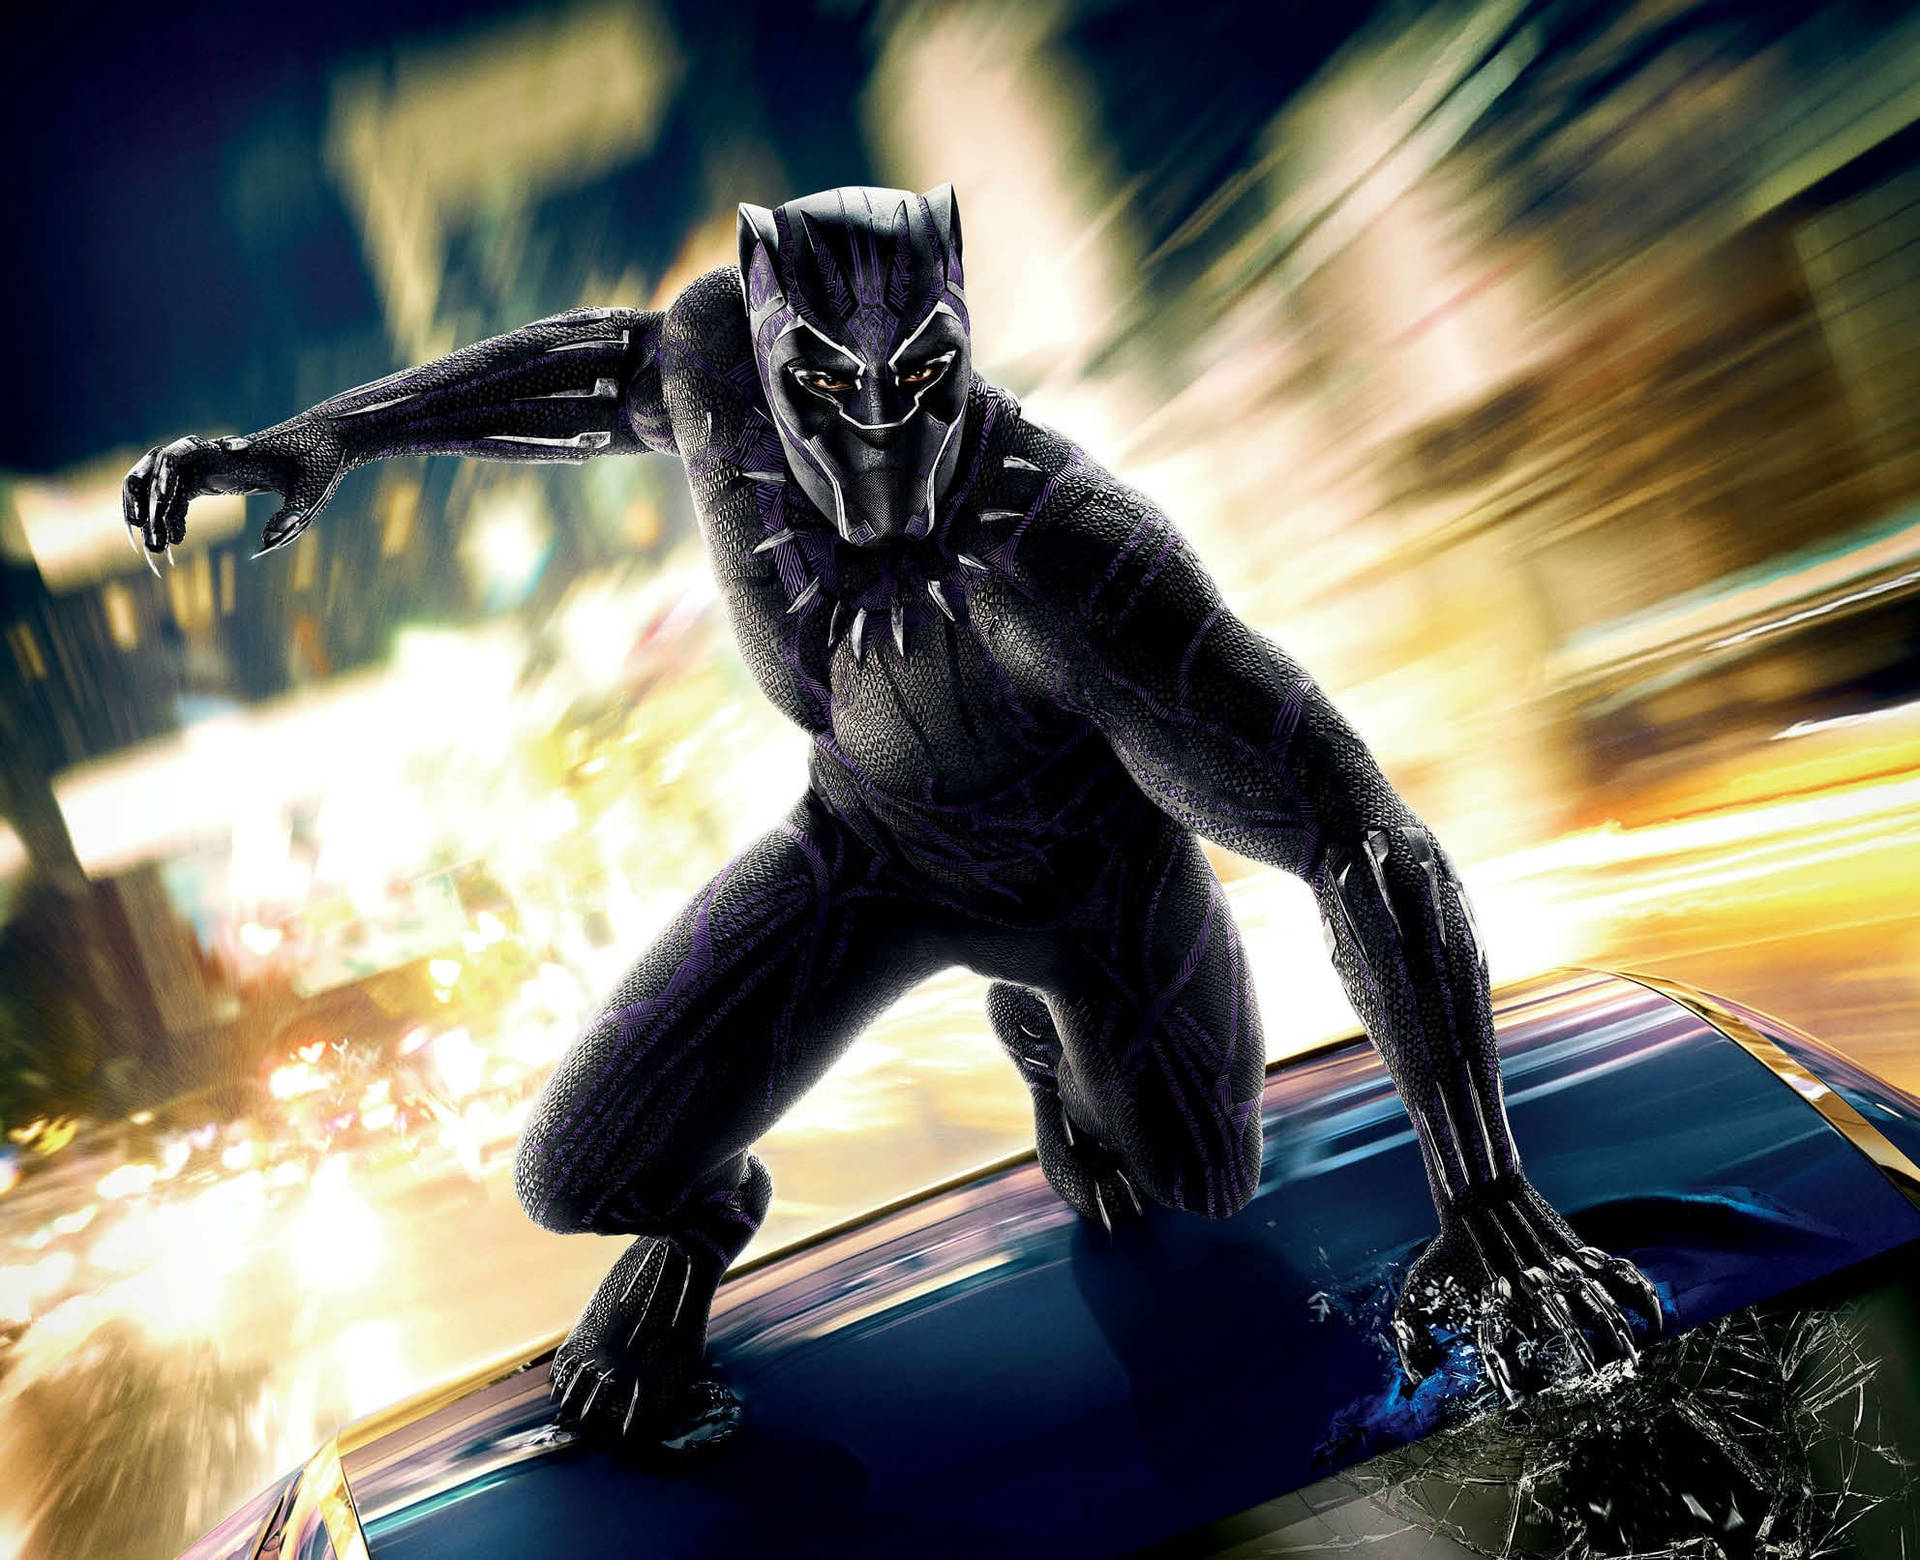 Black Panther, the powerful superhero Wallpaper